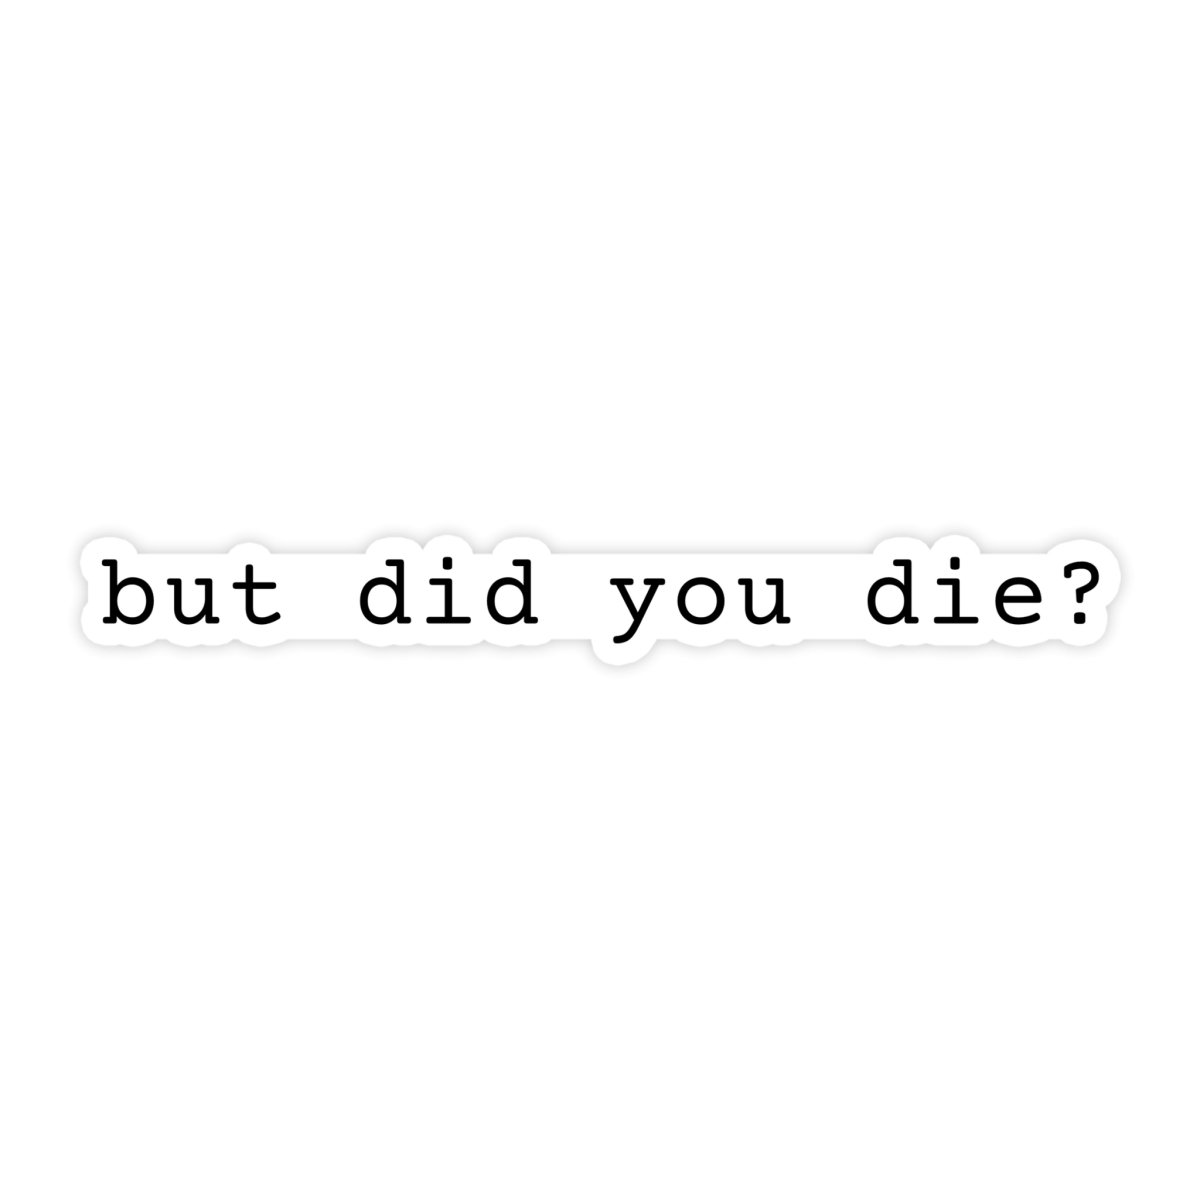 But Did You Die? Funny Meme Sticker - stickerbullBut Did You Die? Funny Meme StickerRetail StickerstickerbullstickerbullDidYouDie_#169But Did You Die? Funny Meme Sticker